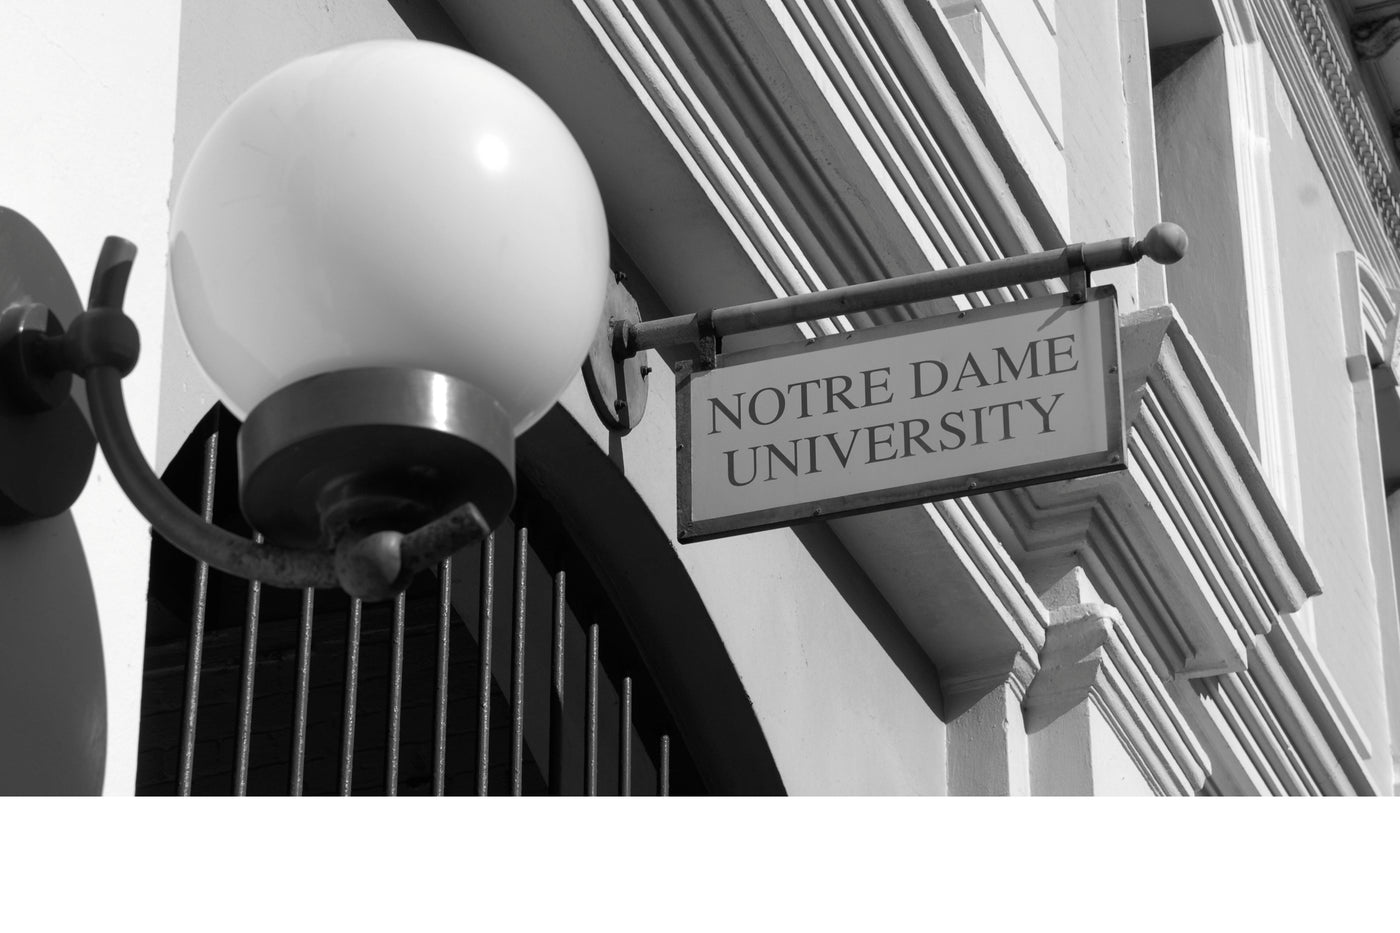 Notre Dame University